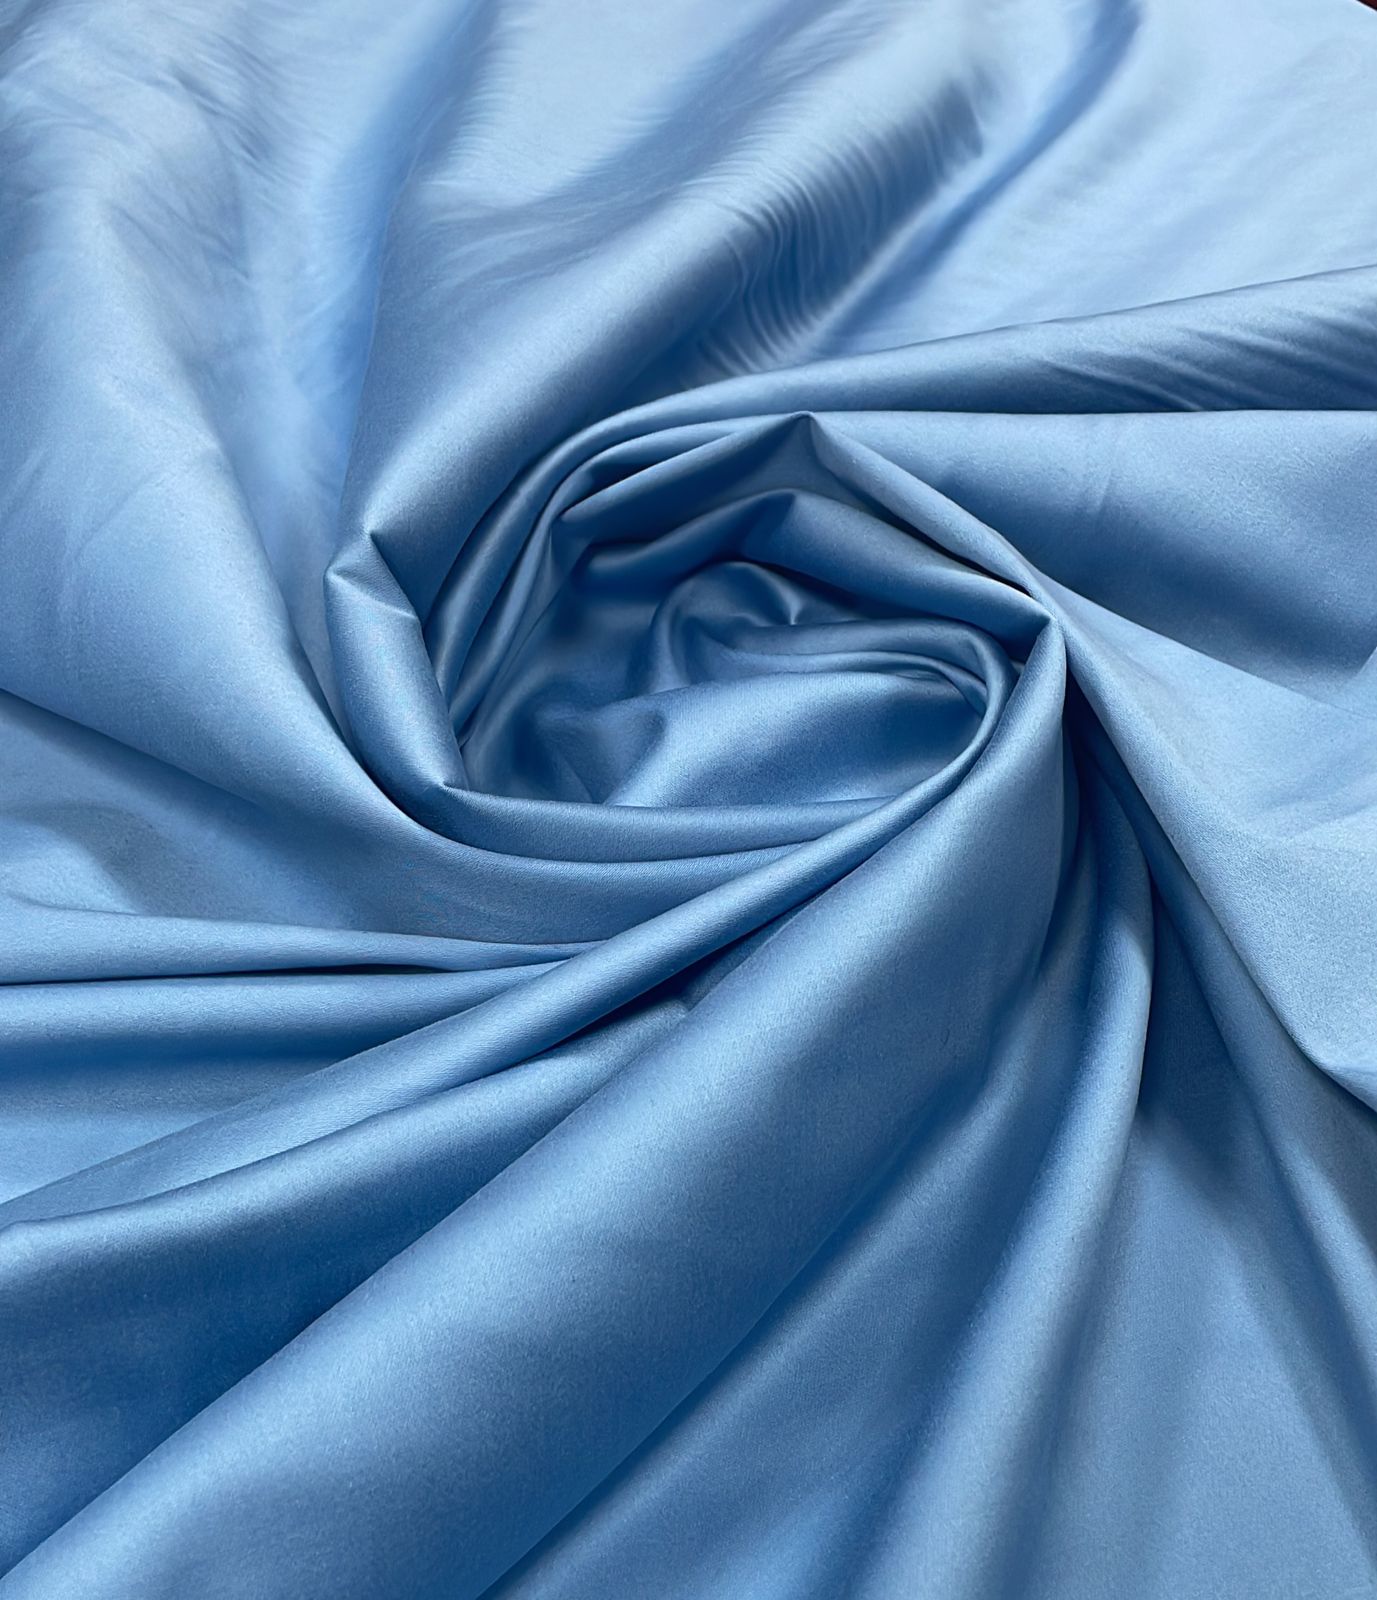 Sarja Cotton Acetinada com Elastano Azul Celeste